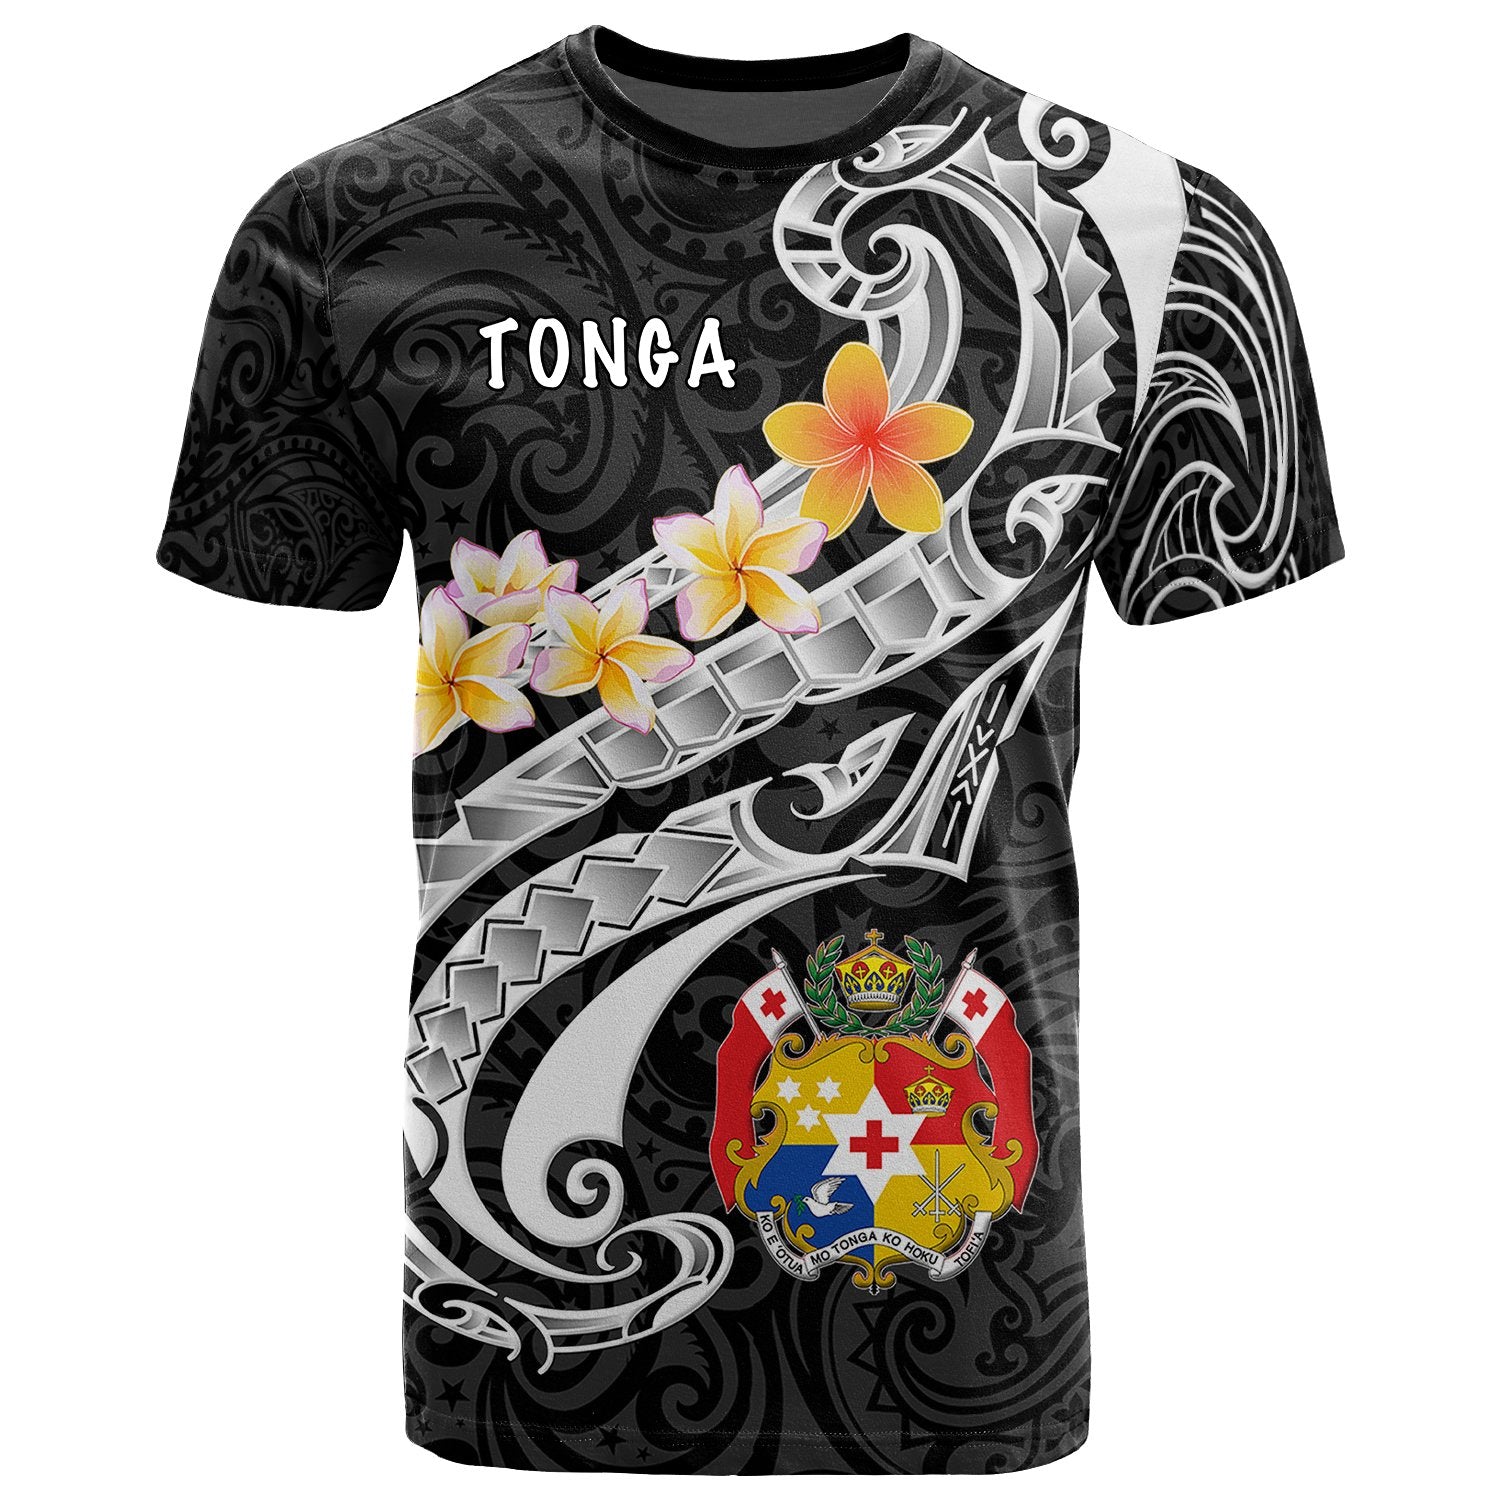 Tonga T Shirt Tonga Seal Polynesian Patterns Plumeria (Black) Unisex Black - Polynesian Pride